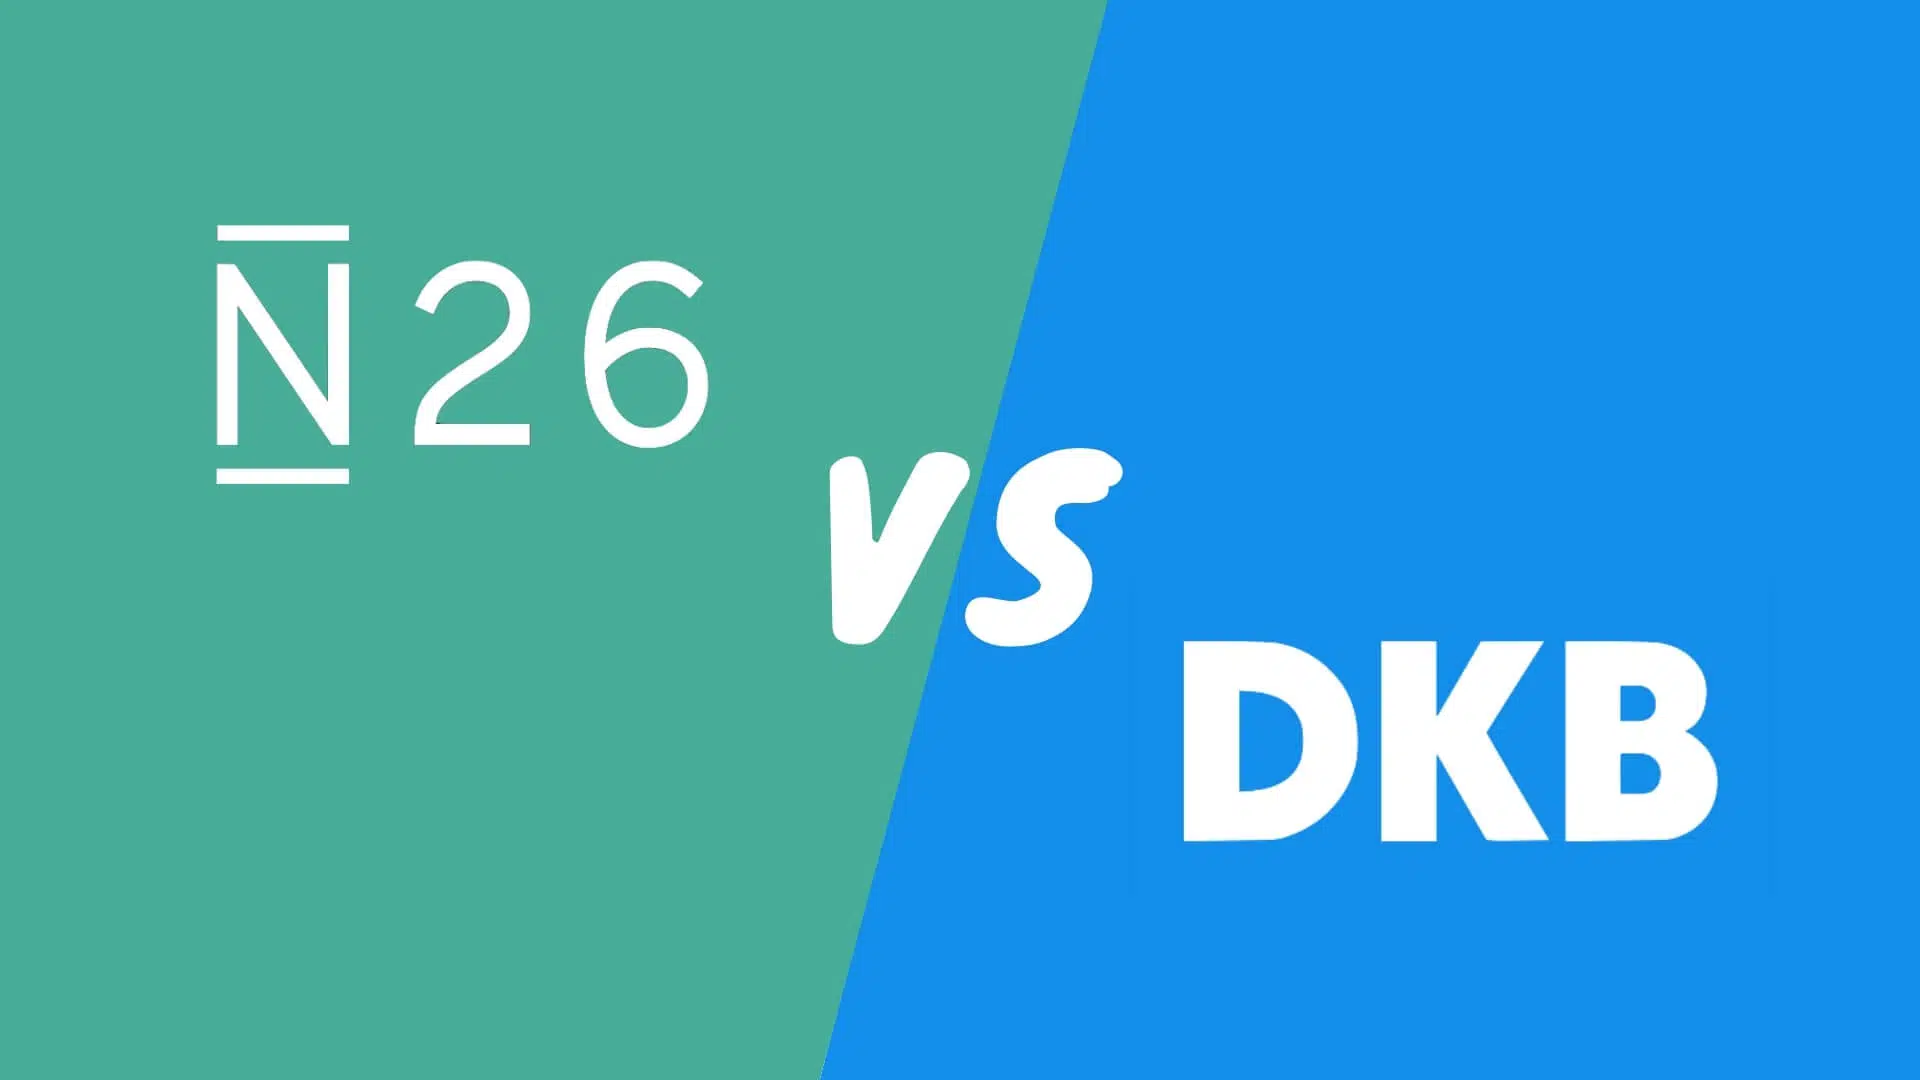 N26 vs DKB Girokonto Kreditkarte Vergleich Bewertung Test Erfahrungsbericht Erfahrungen